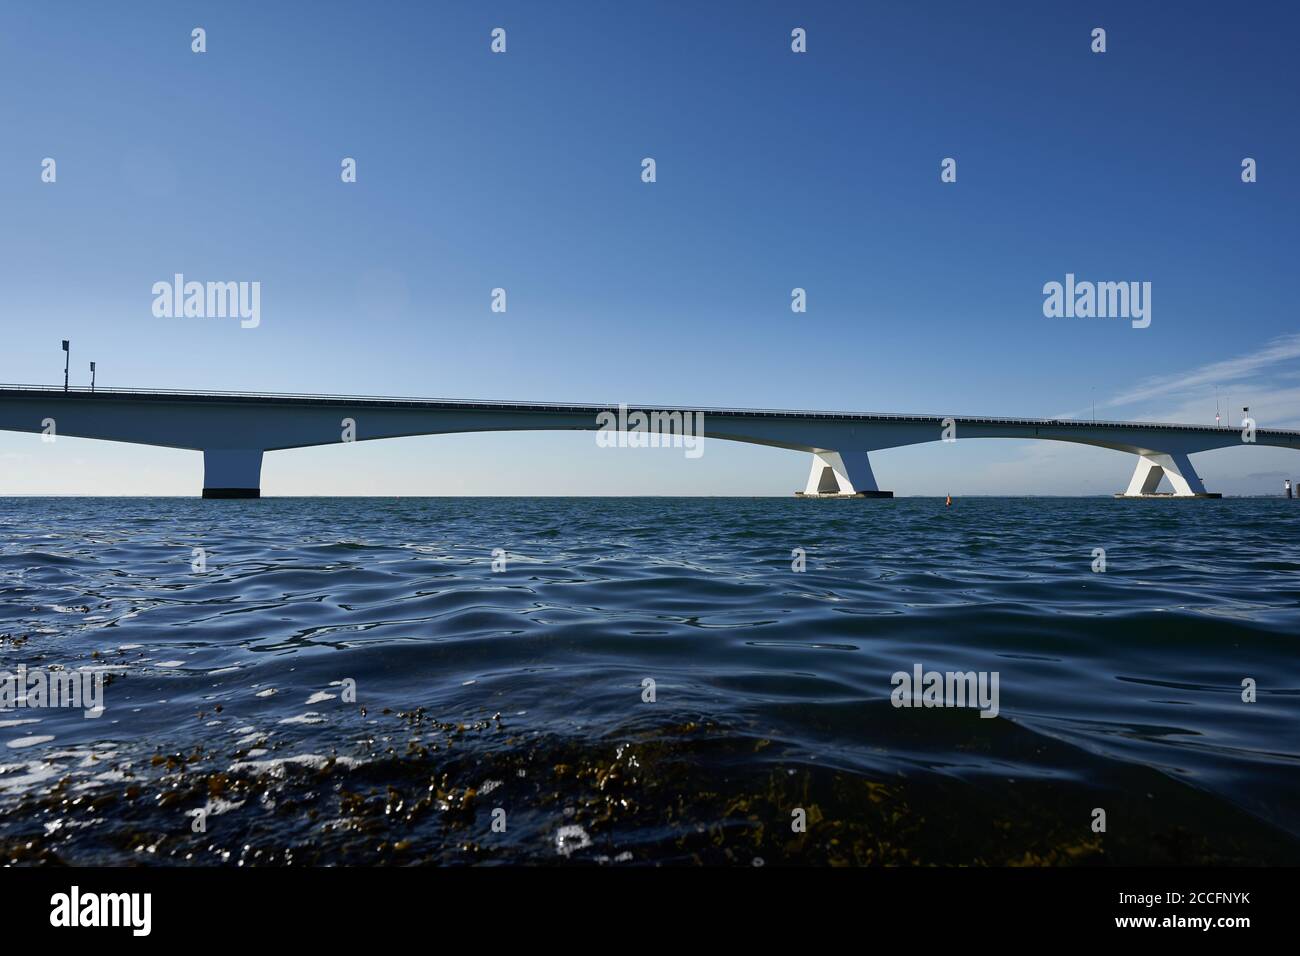 White Zeeland ponte in Olanda, mare blu acqua e cielo, alghe marine in primo piano. Paesi Bassi, Zelanda. Foto Stock